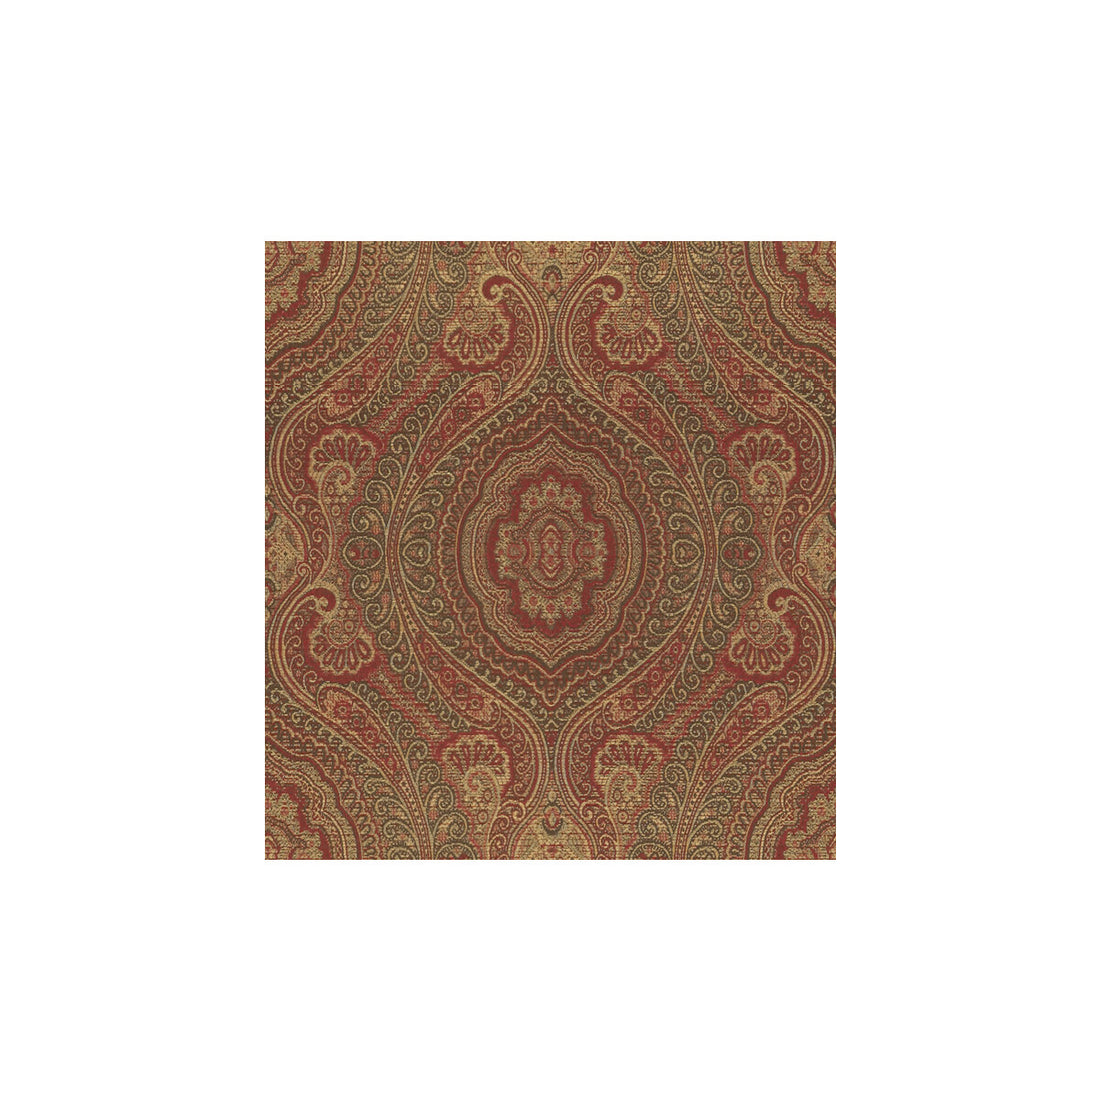 Kravet Design fabric in 31420-19 color - pattern 31420.19.0 - by Kravet Design in the Gis collection